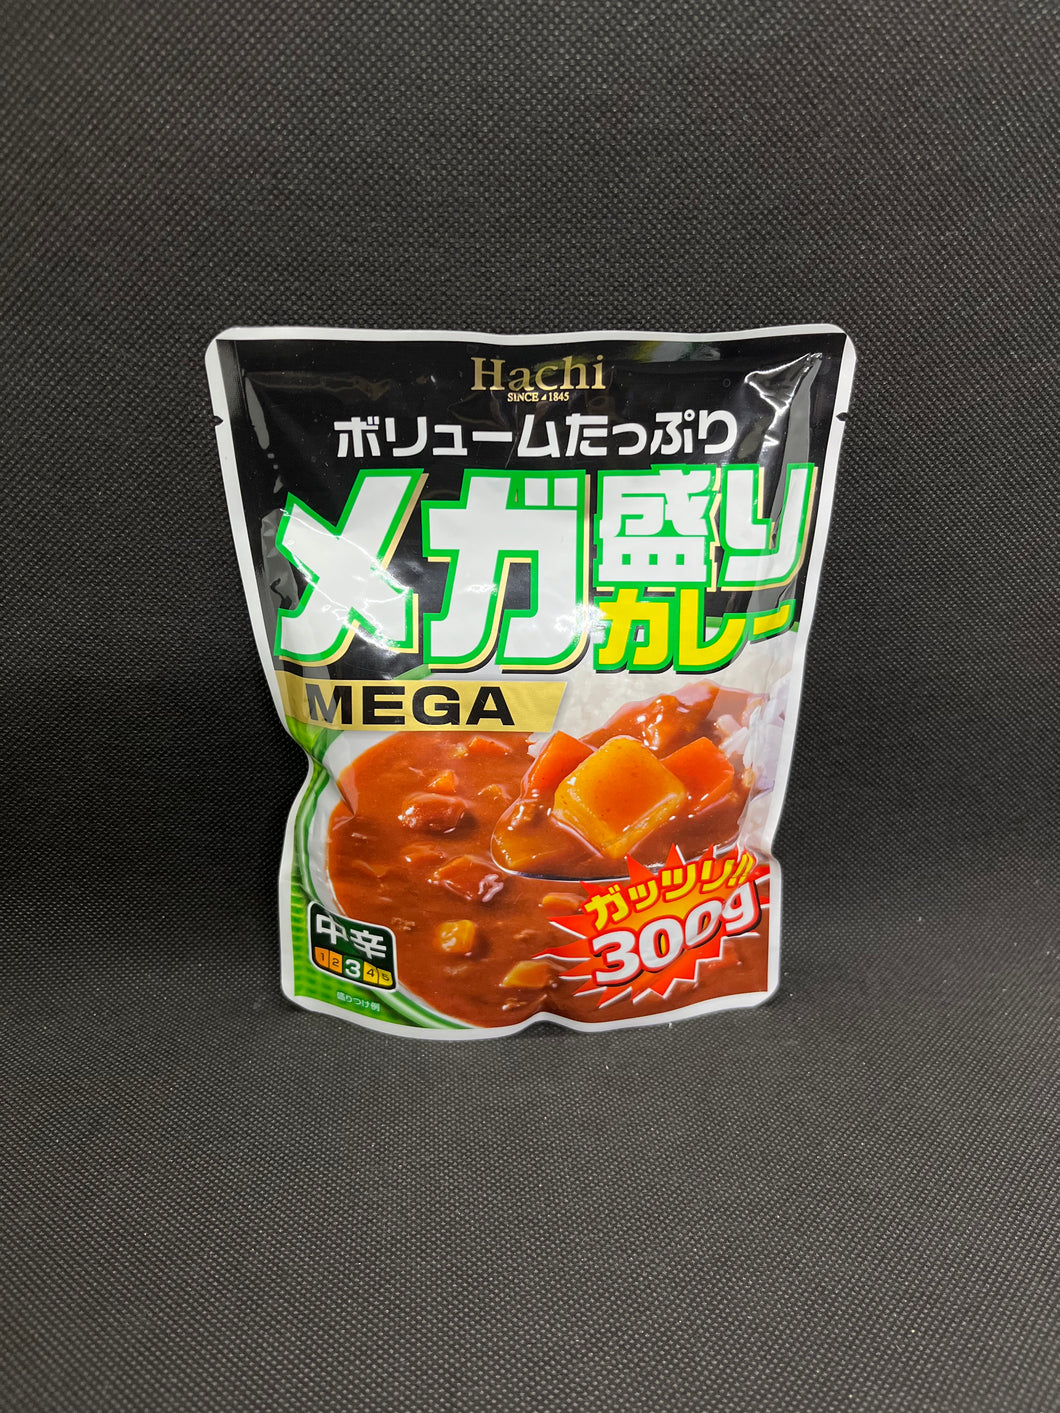 Mega Mori Curry (mid.hot)